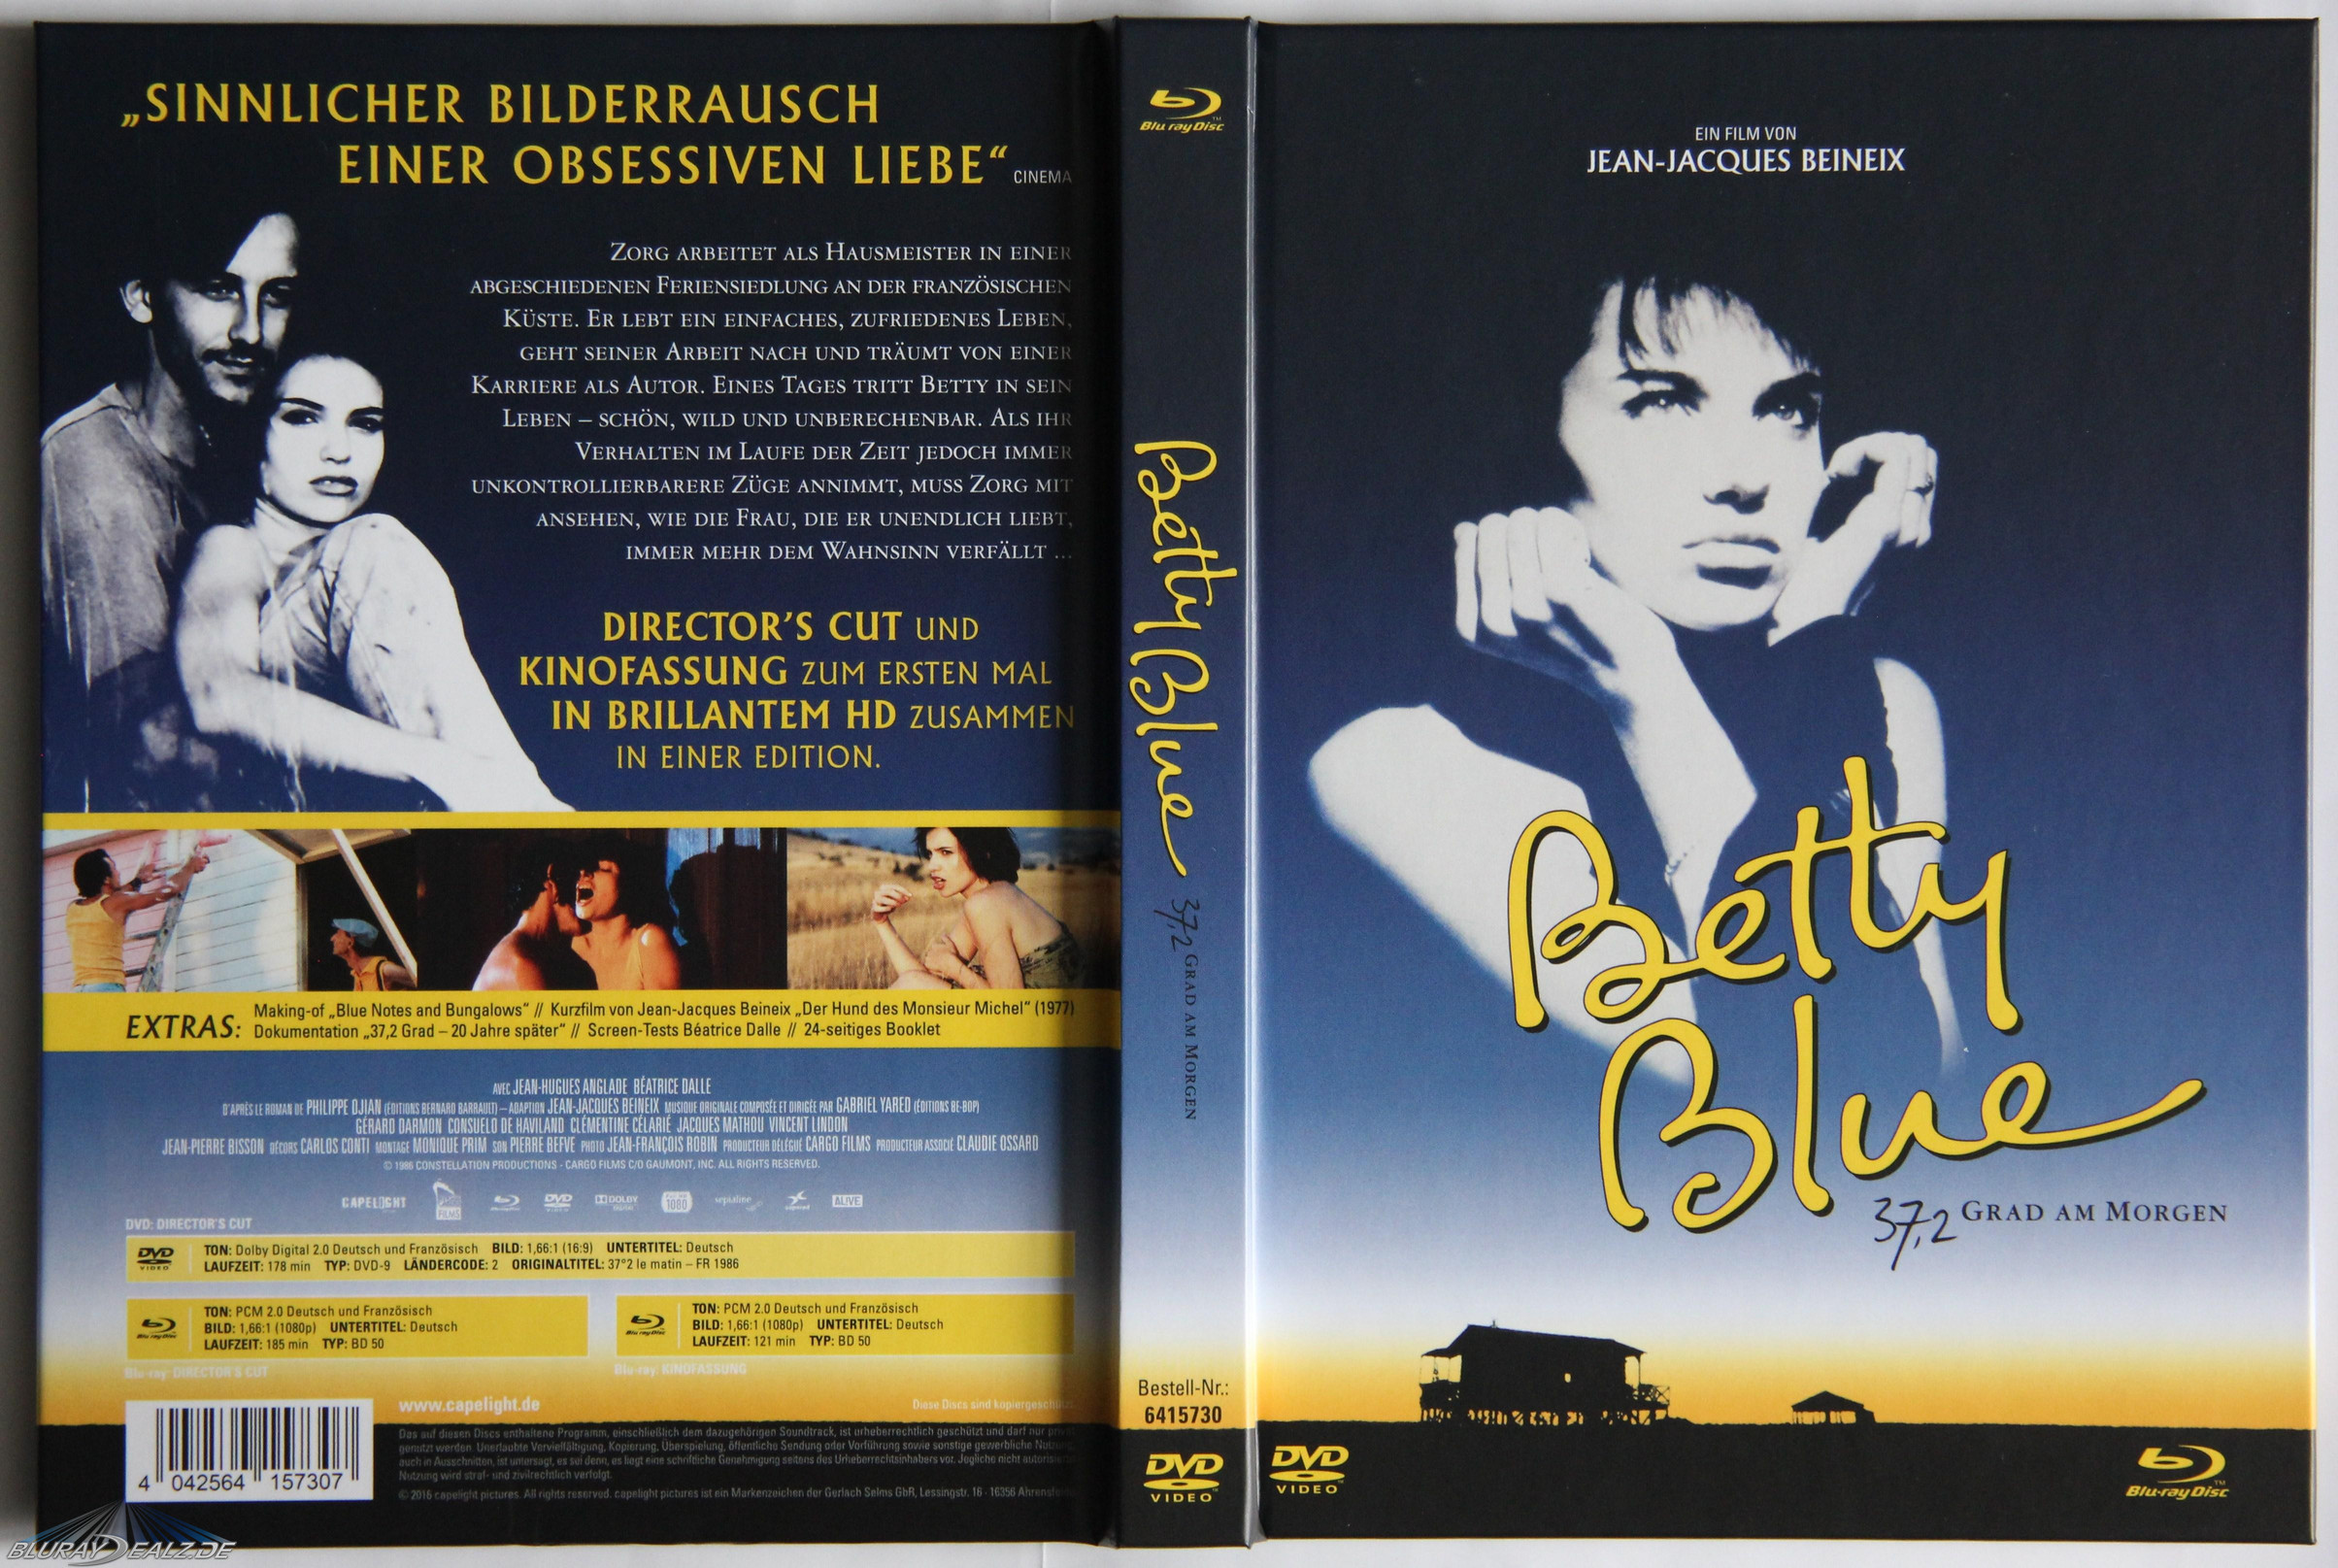 Review Betty Blue 37 2 Grad Am Morgen Limited Collector S Edition Mediabook Bluray Dealz De